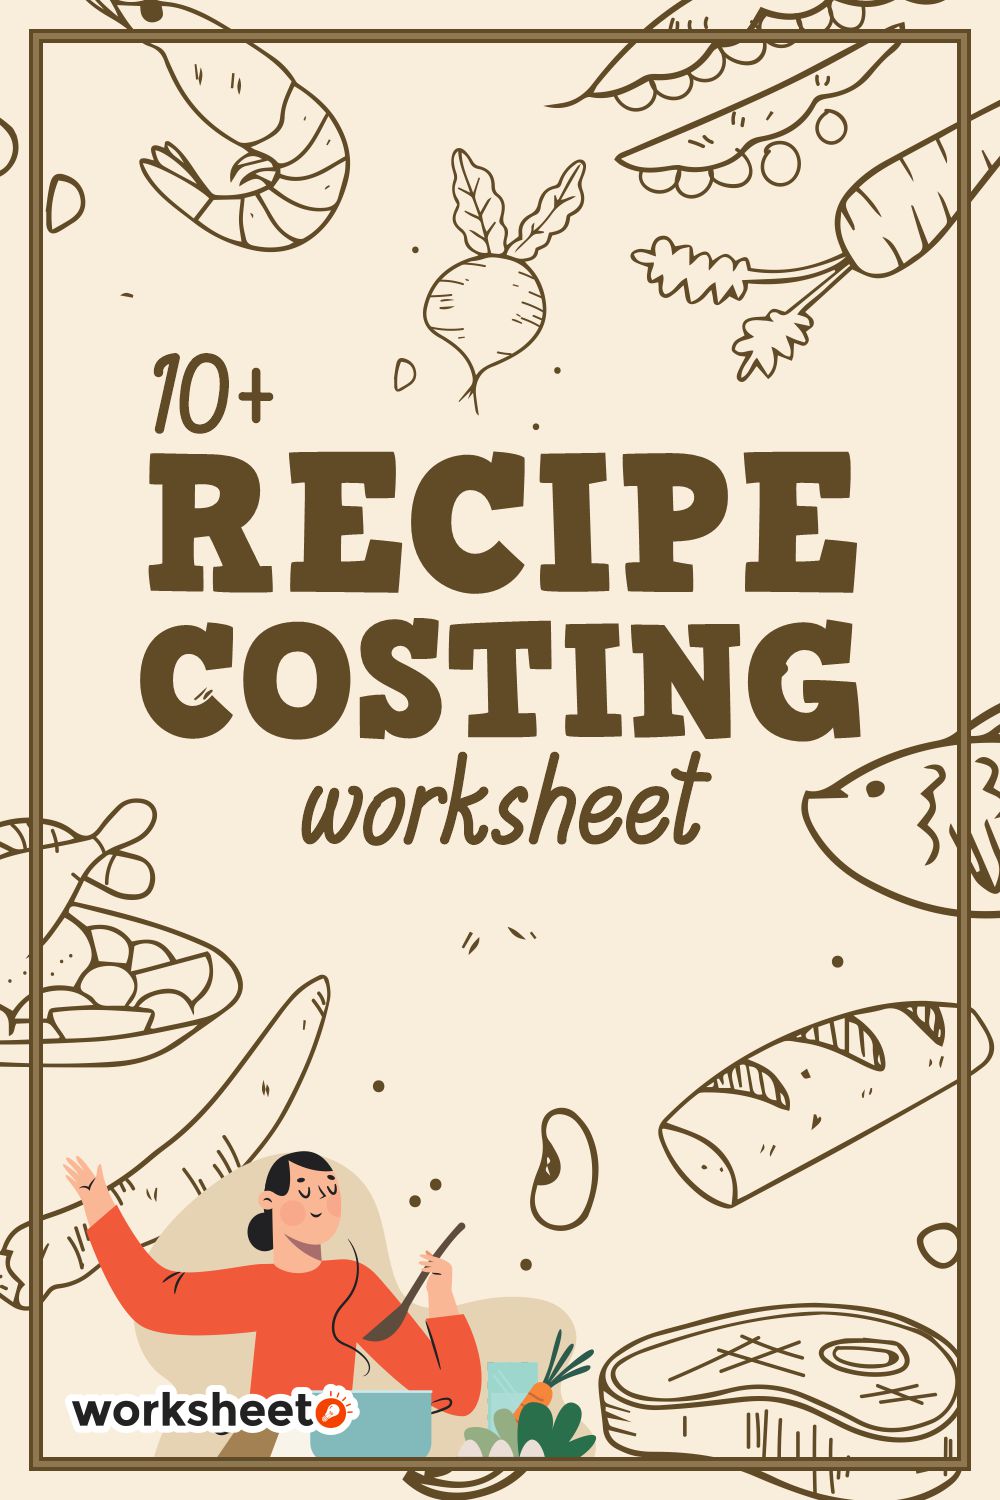 6 Images of Recipe Costing Worksheet